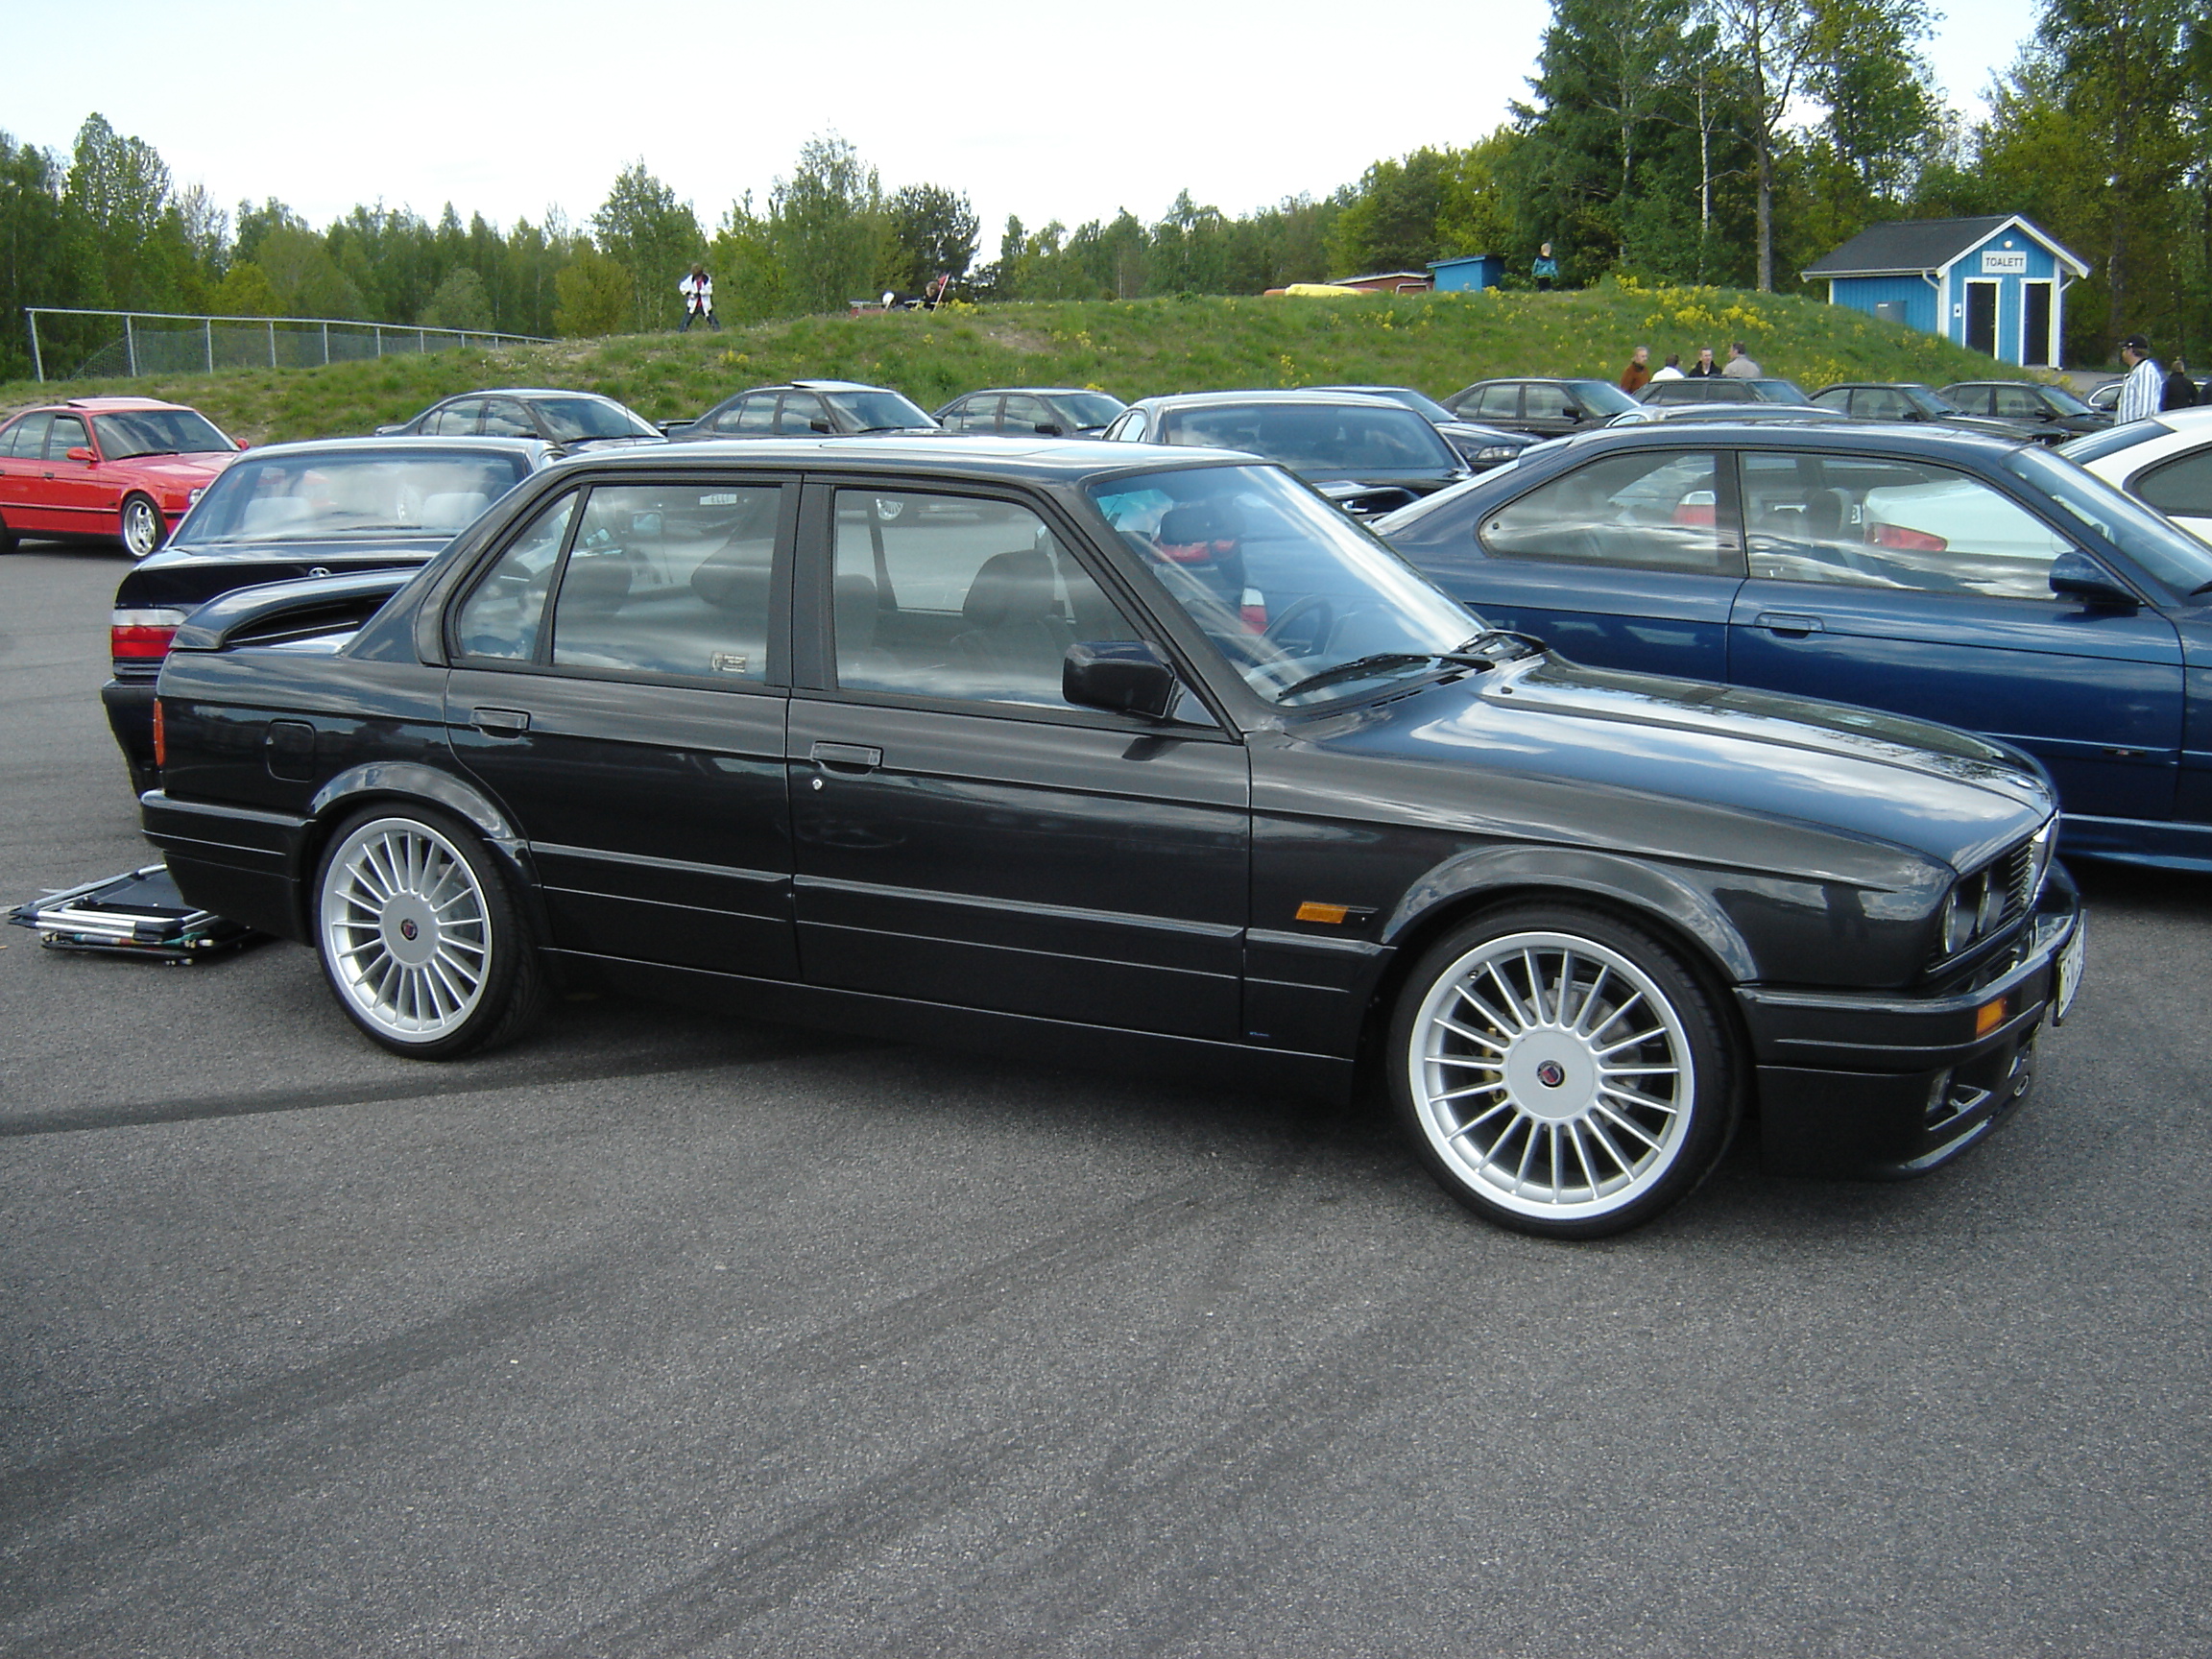 BMW 325i | Flickr - Photo Sharing!